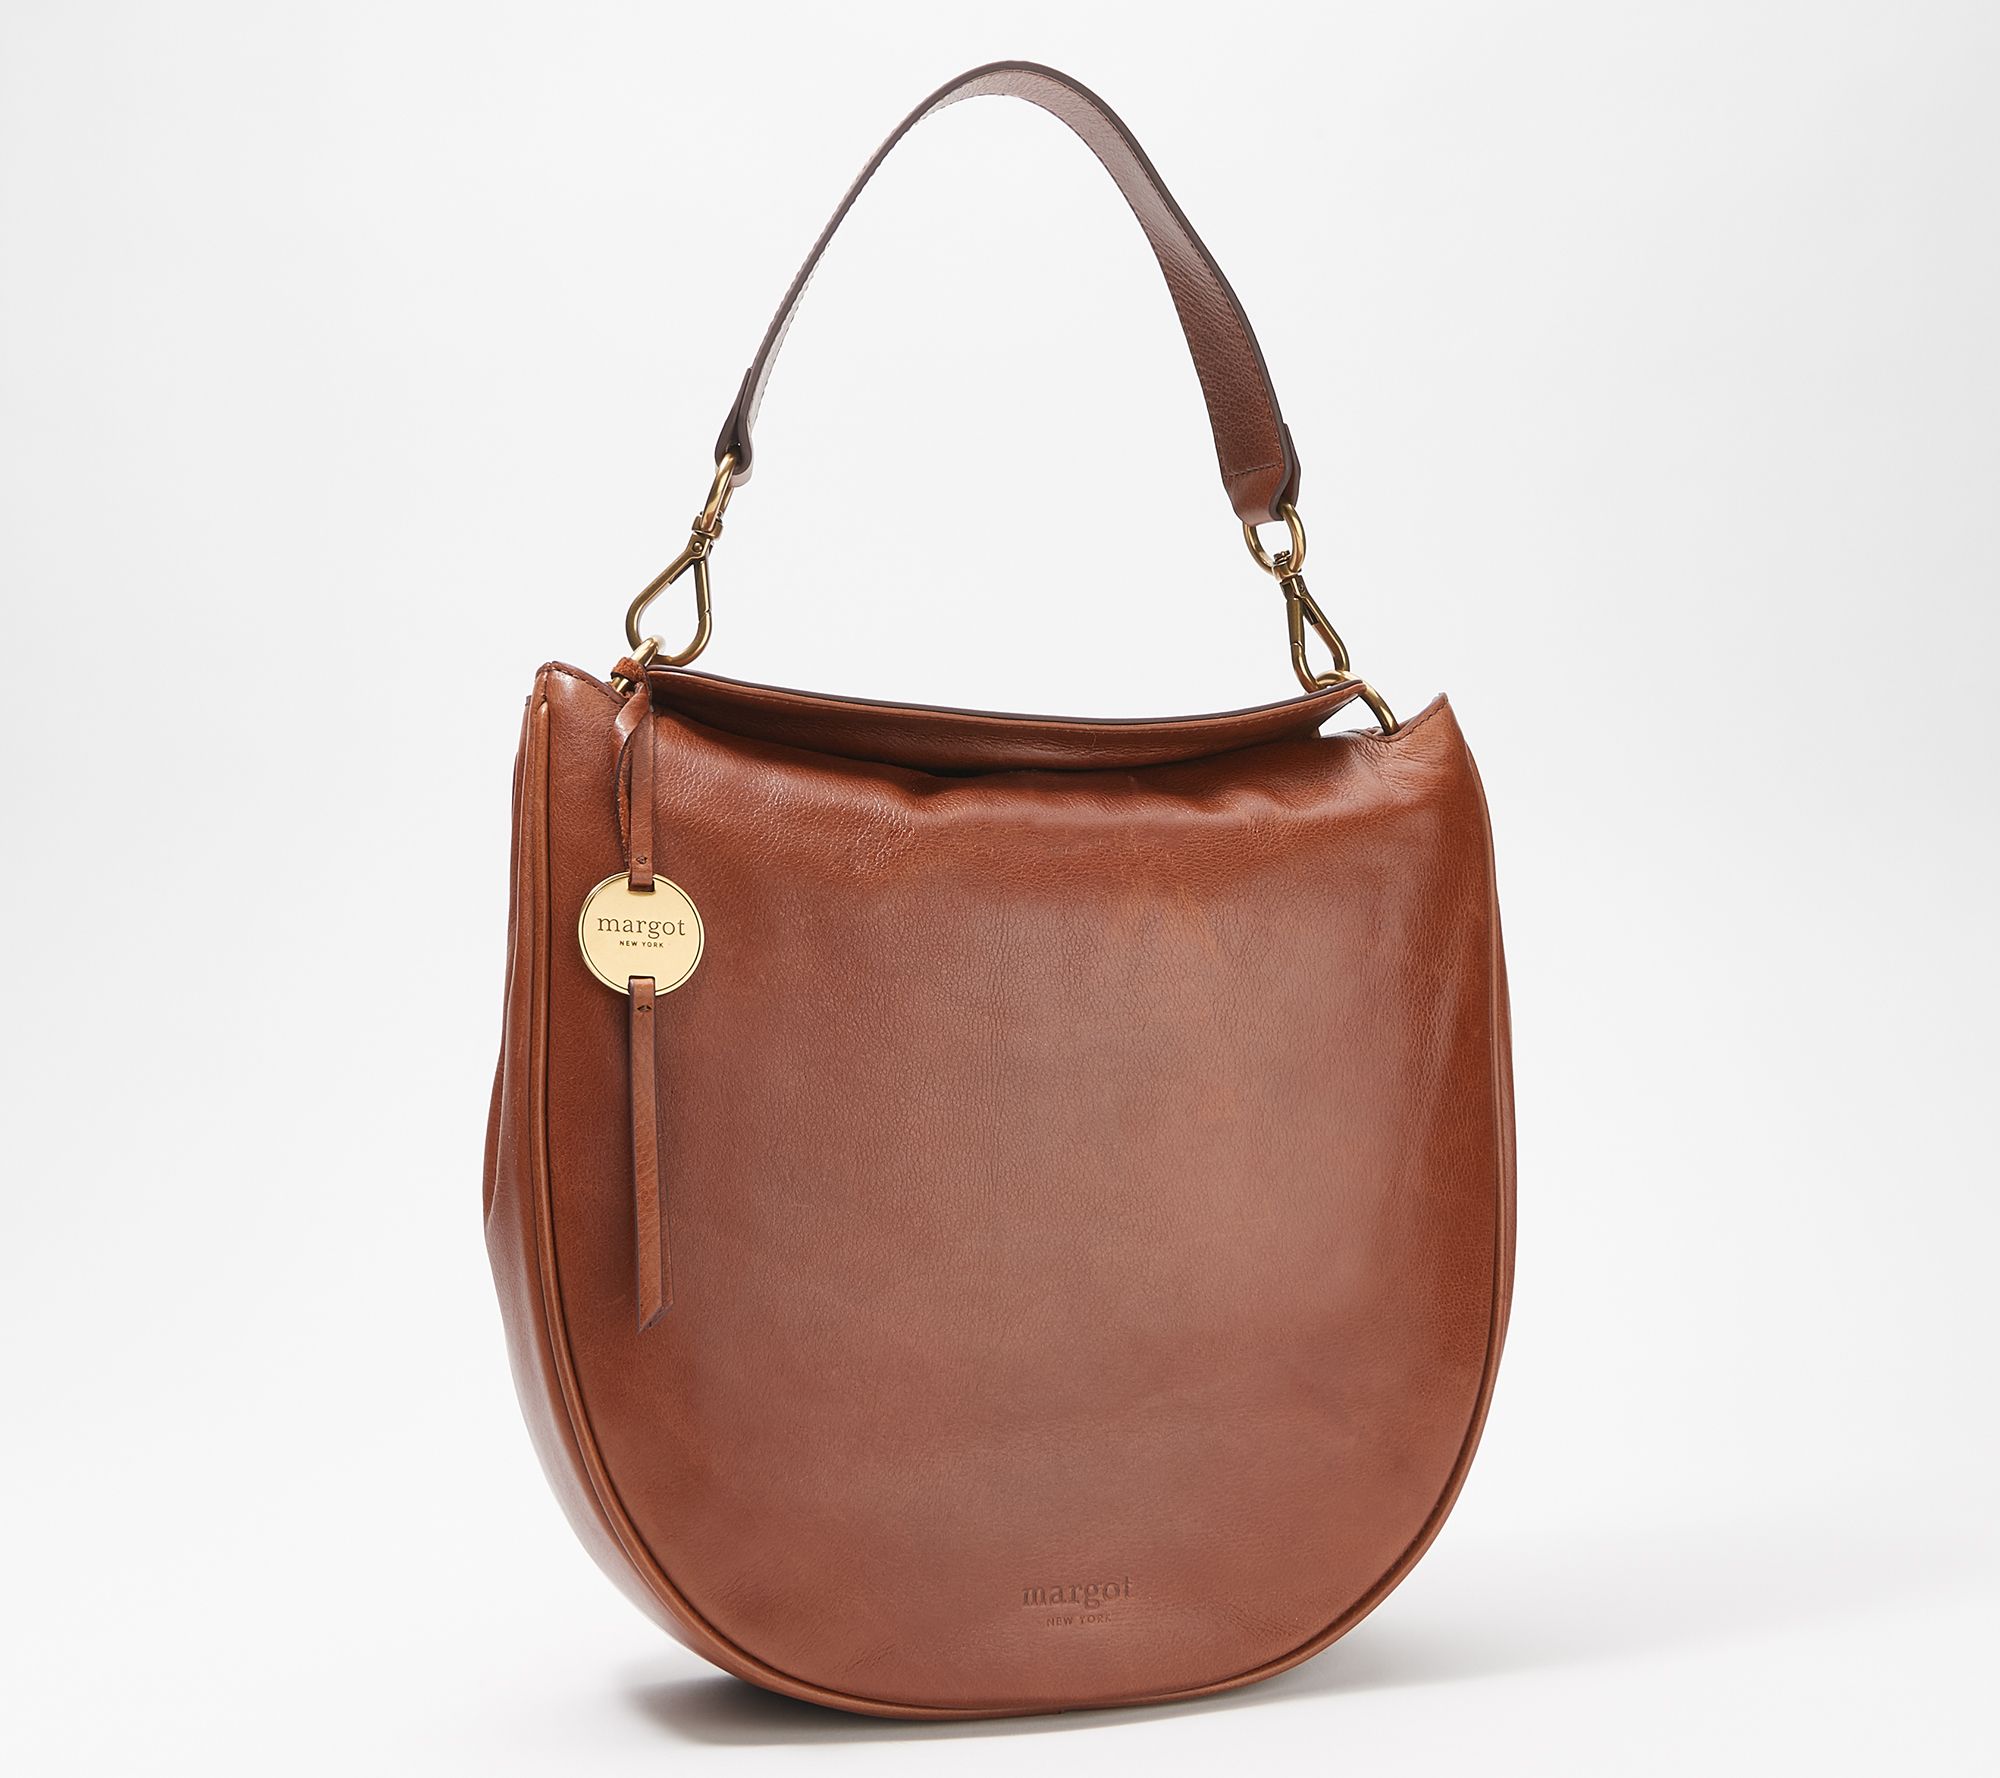 Margot Genuine Leather Handbags